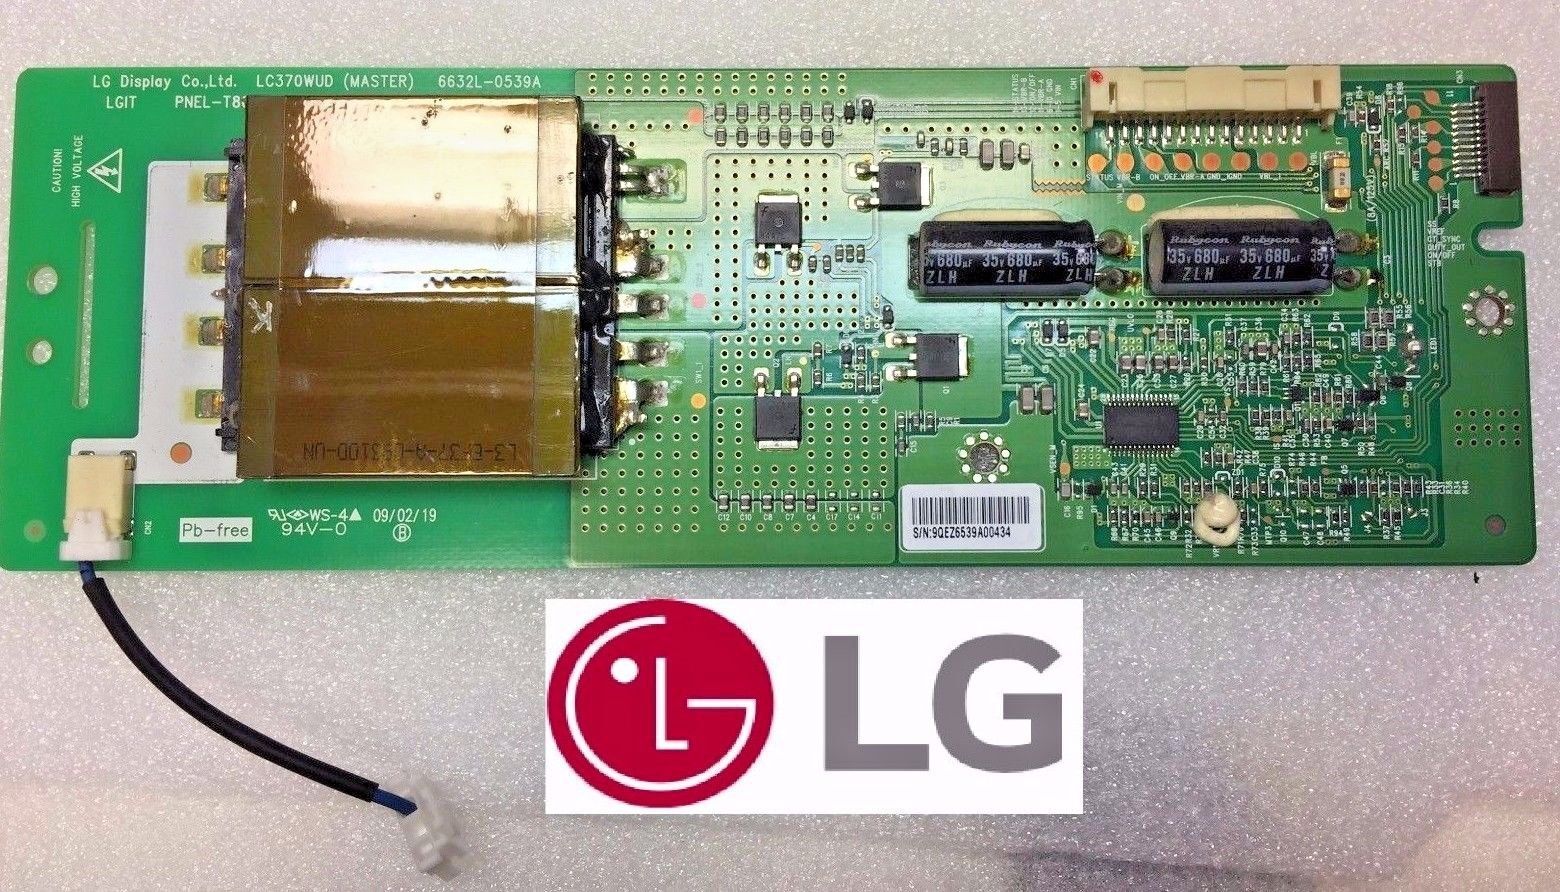 problem italic erection LG TV 37lh7030 Inverter Master Lc370wud 632l-0539a Pnel-t807a for sale  online | eBay